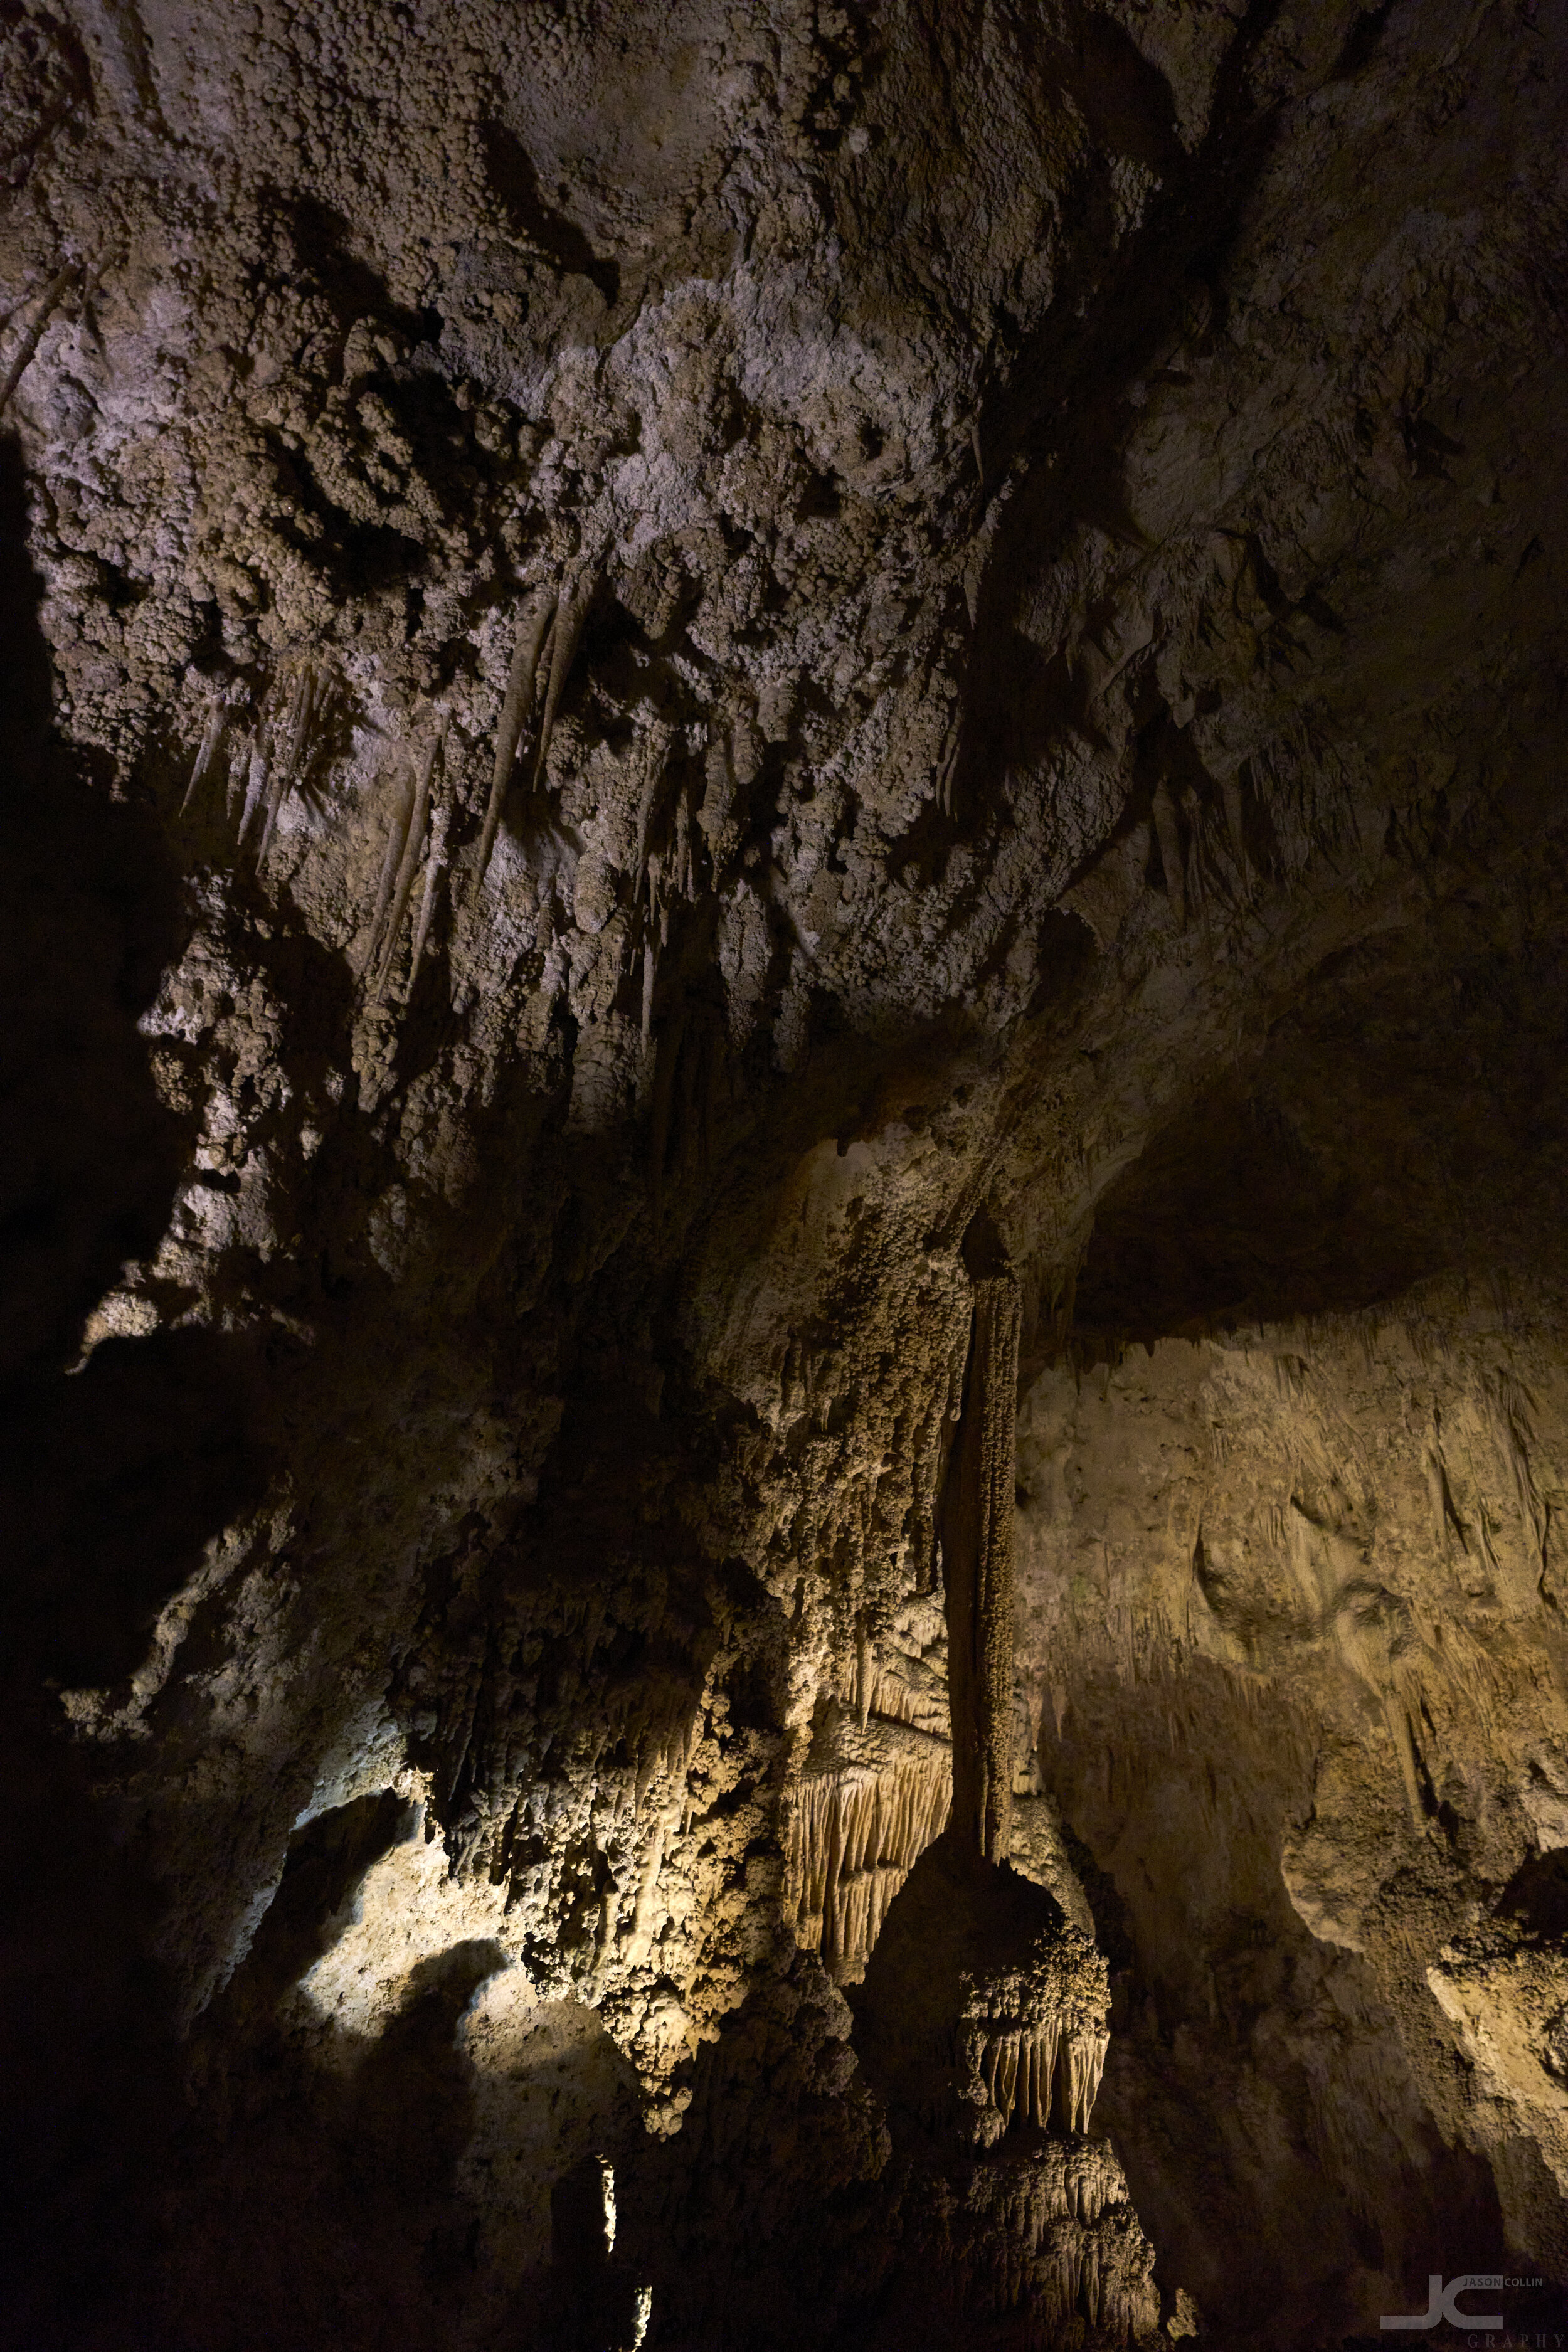 carlsbad-caverns-7-10-2021-nm-23548.jpg